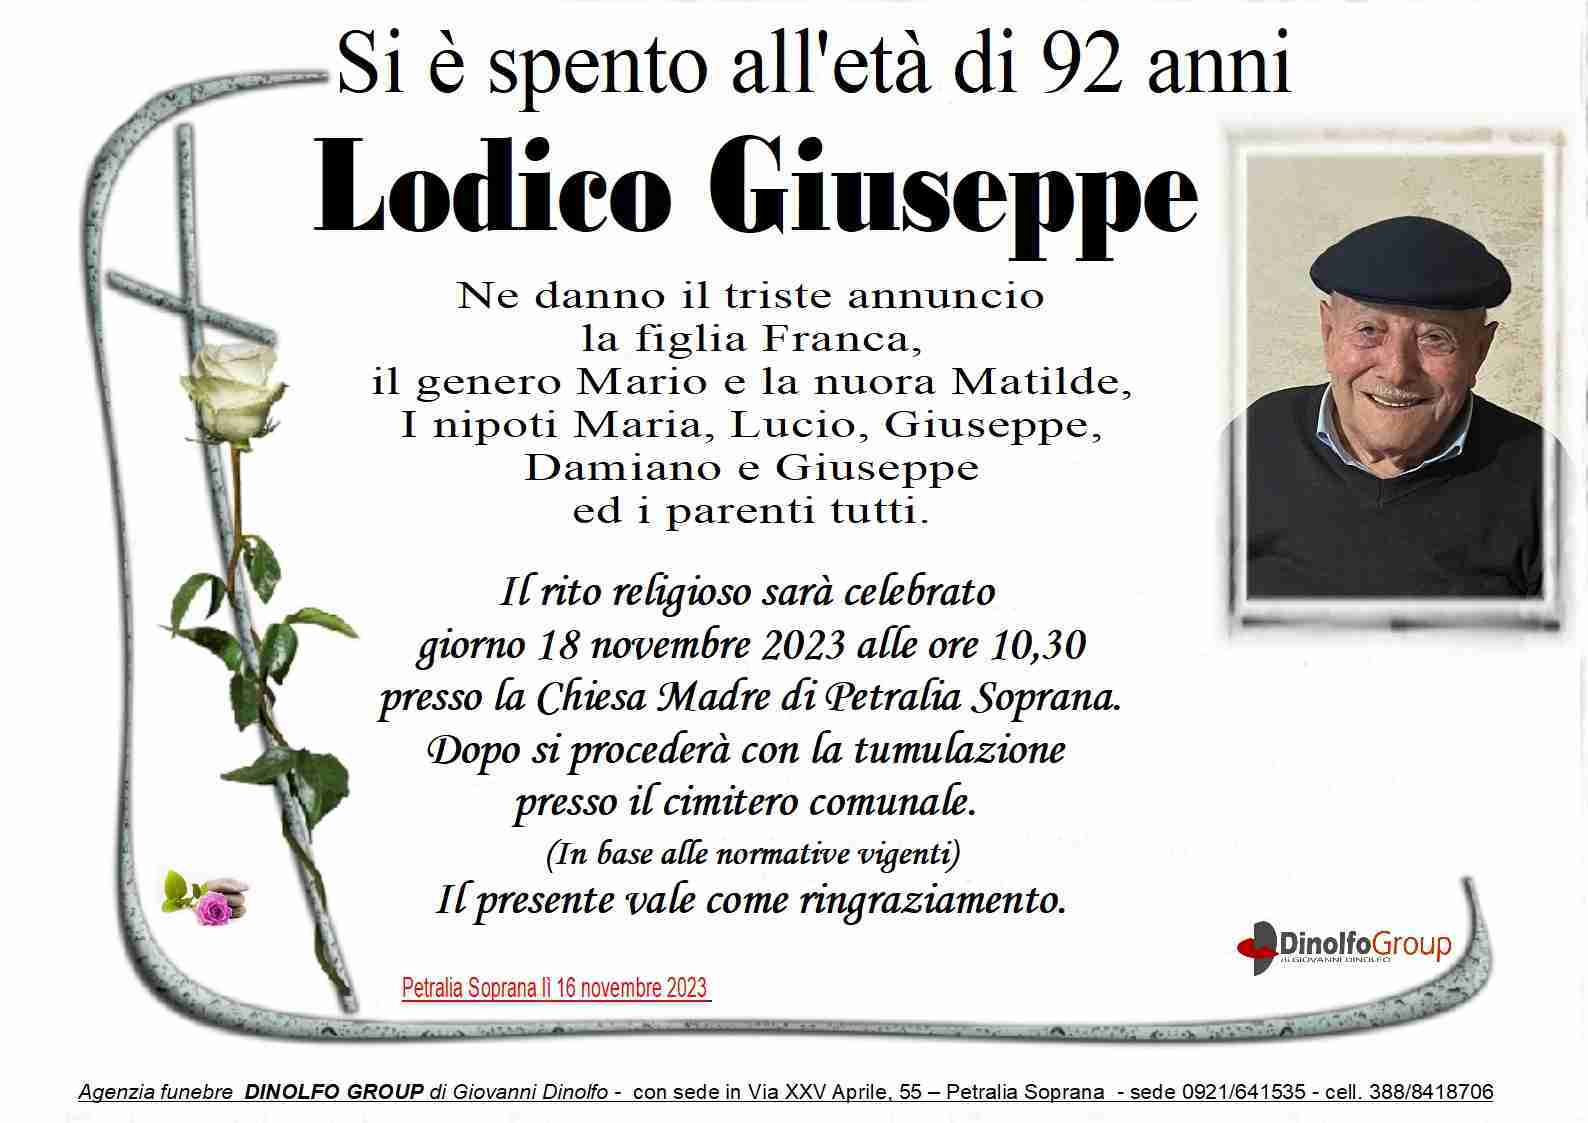 Giuseppe Lodico